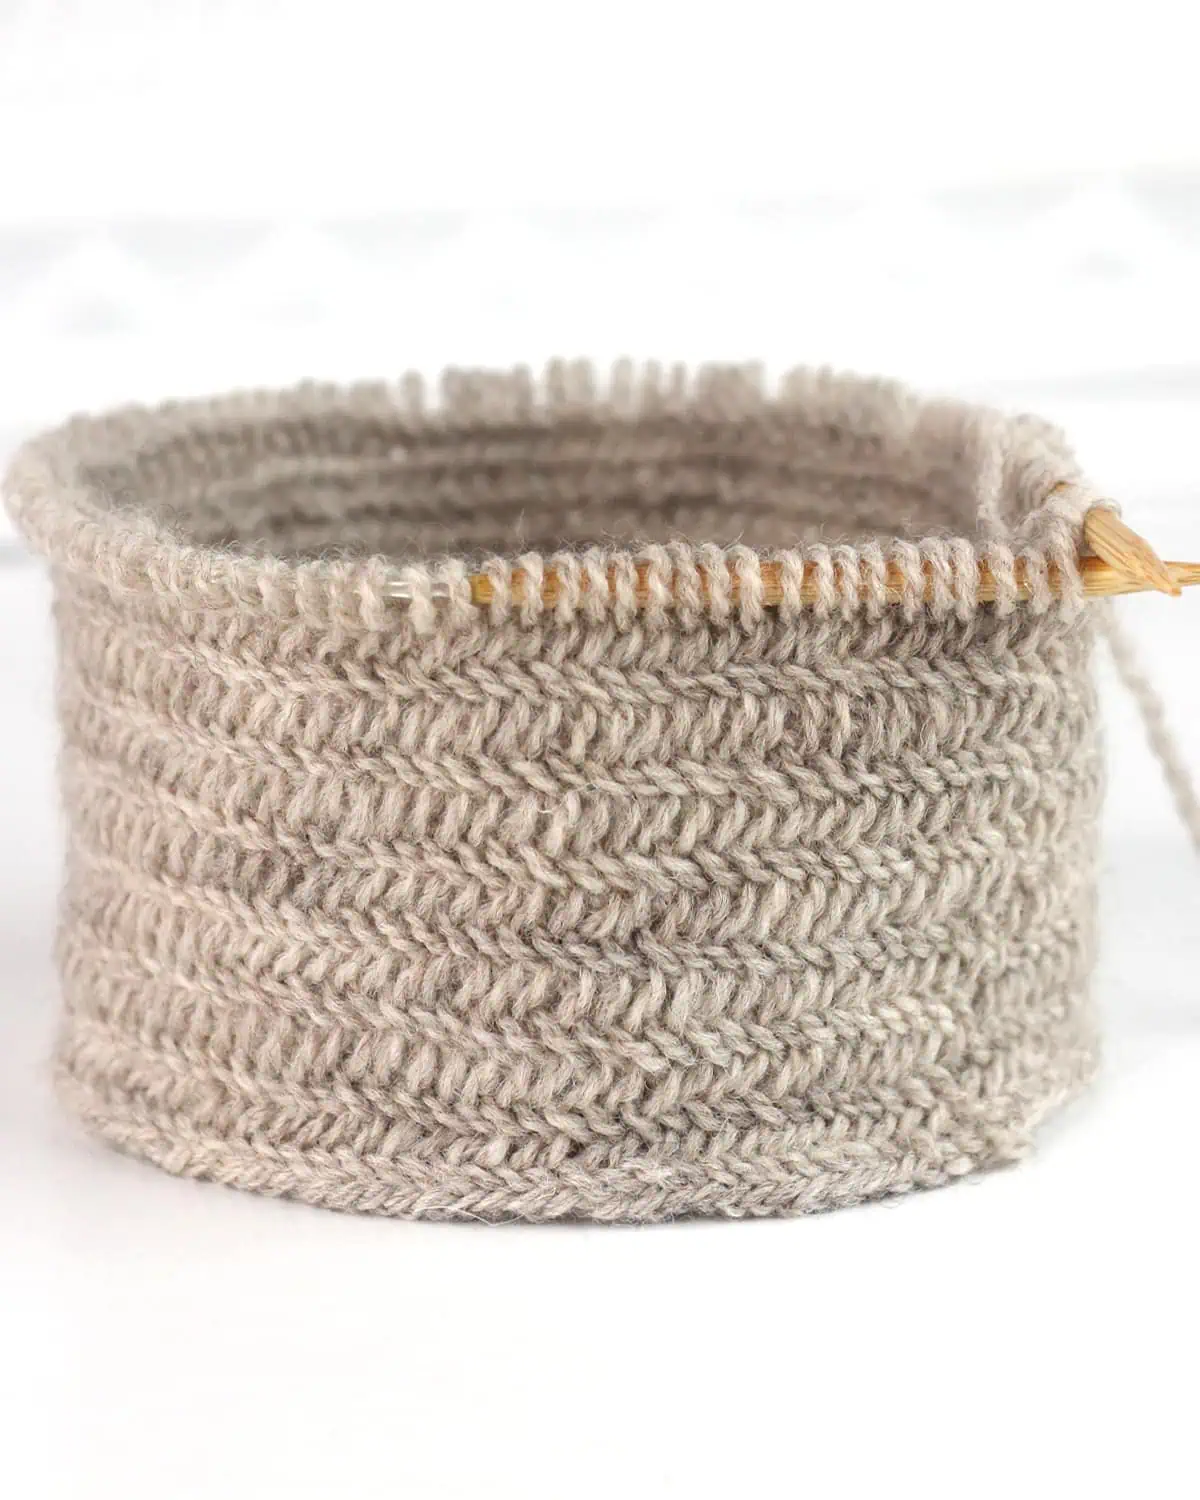 Herringbone knit stitch texture in gray-colored yarn on circular needles.